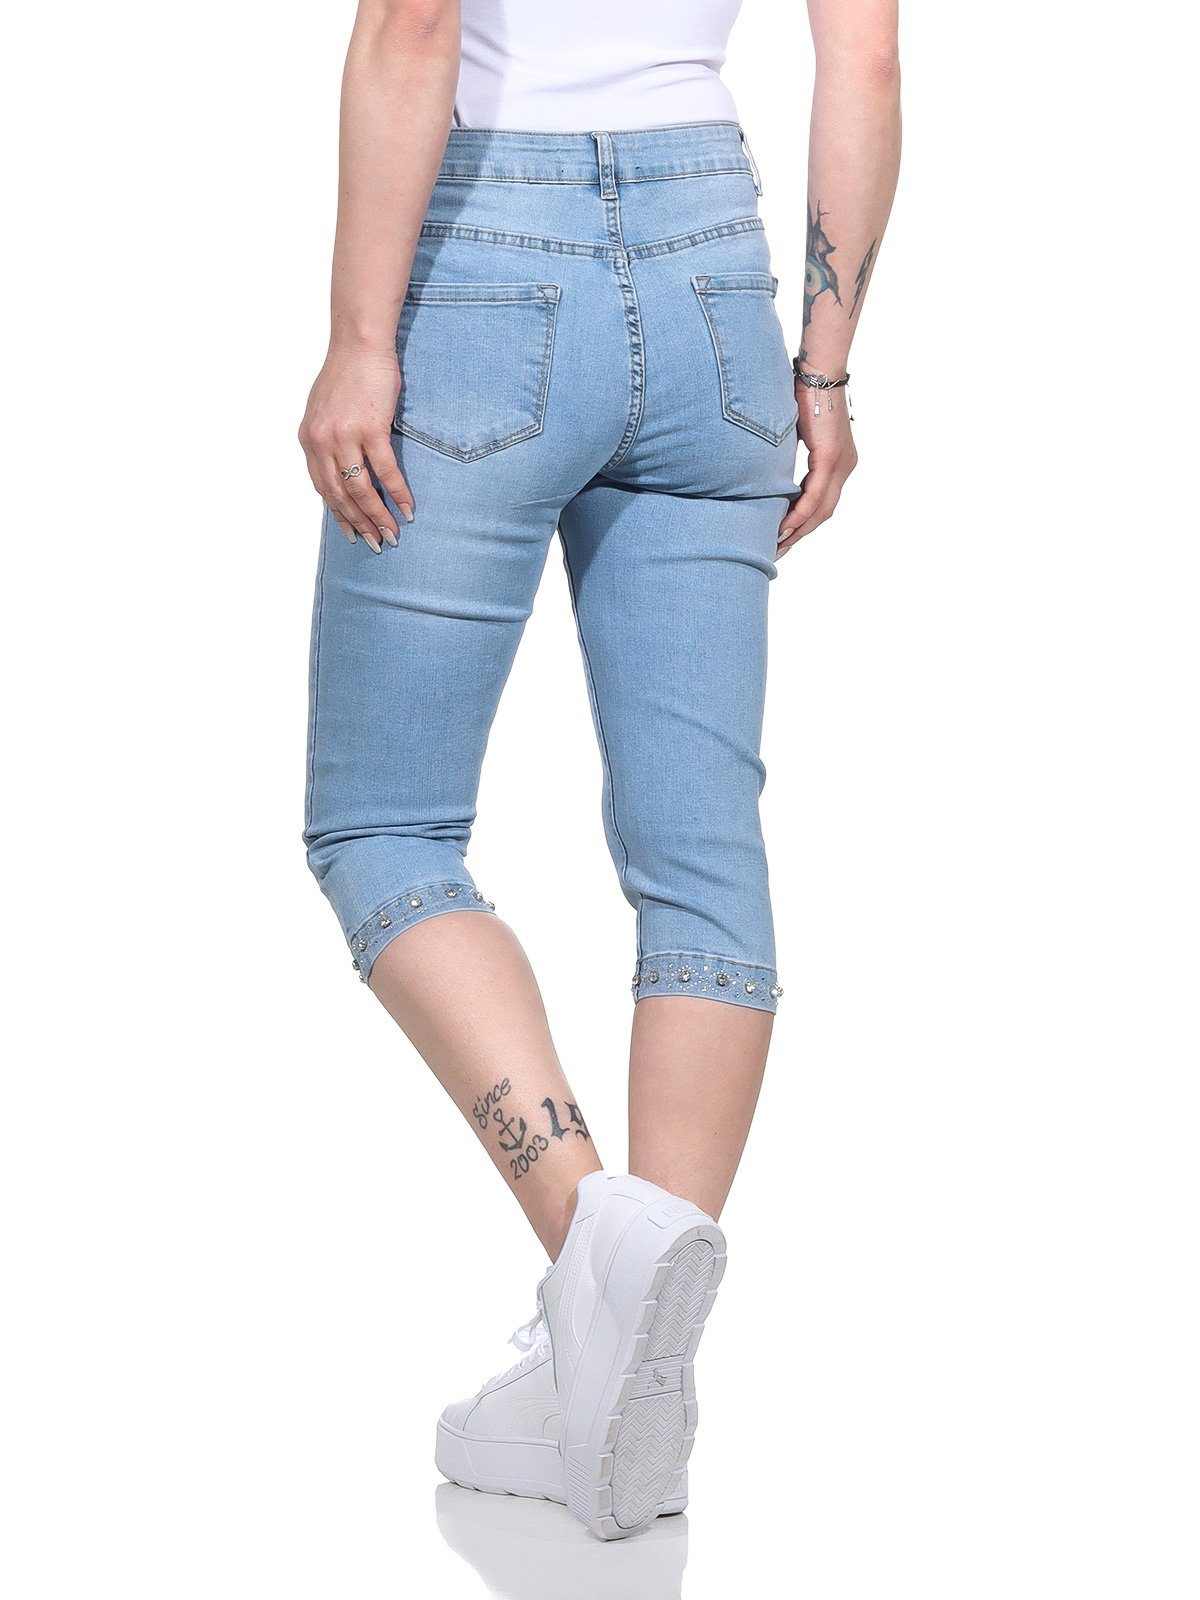 Aurela Damenmode Jeansbermudas Jeans kurze Sommer mit Caprihosen Damen Stretchanteil, Jeanshosen Bermuda 5-Pocket-Style